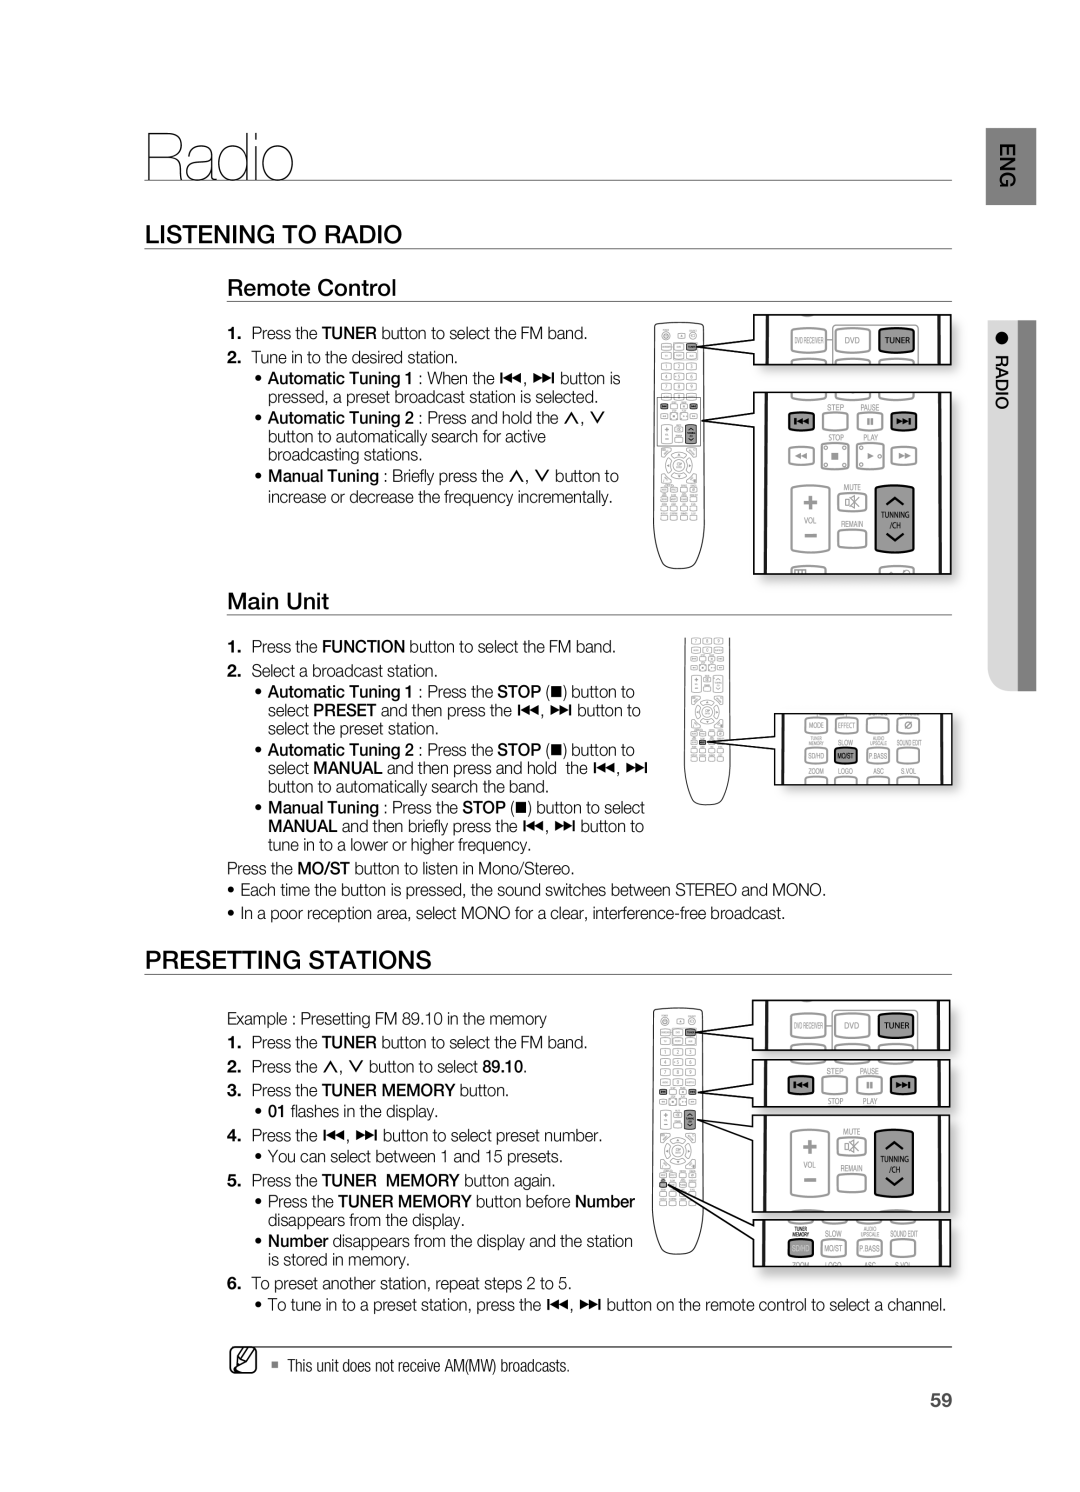 Samsung HT-X725G, HT-TX725G user manual Radio, LISTENING TO rADIO, PrESETTING STATIONS 